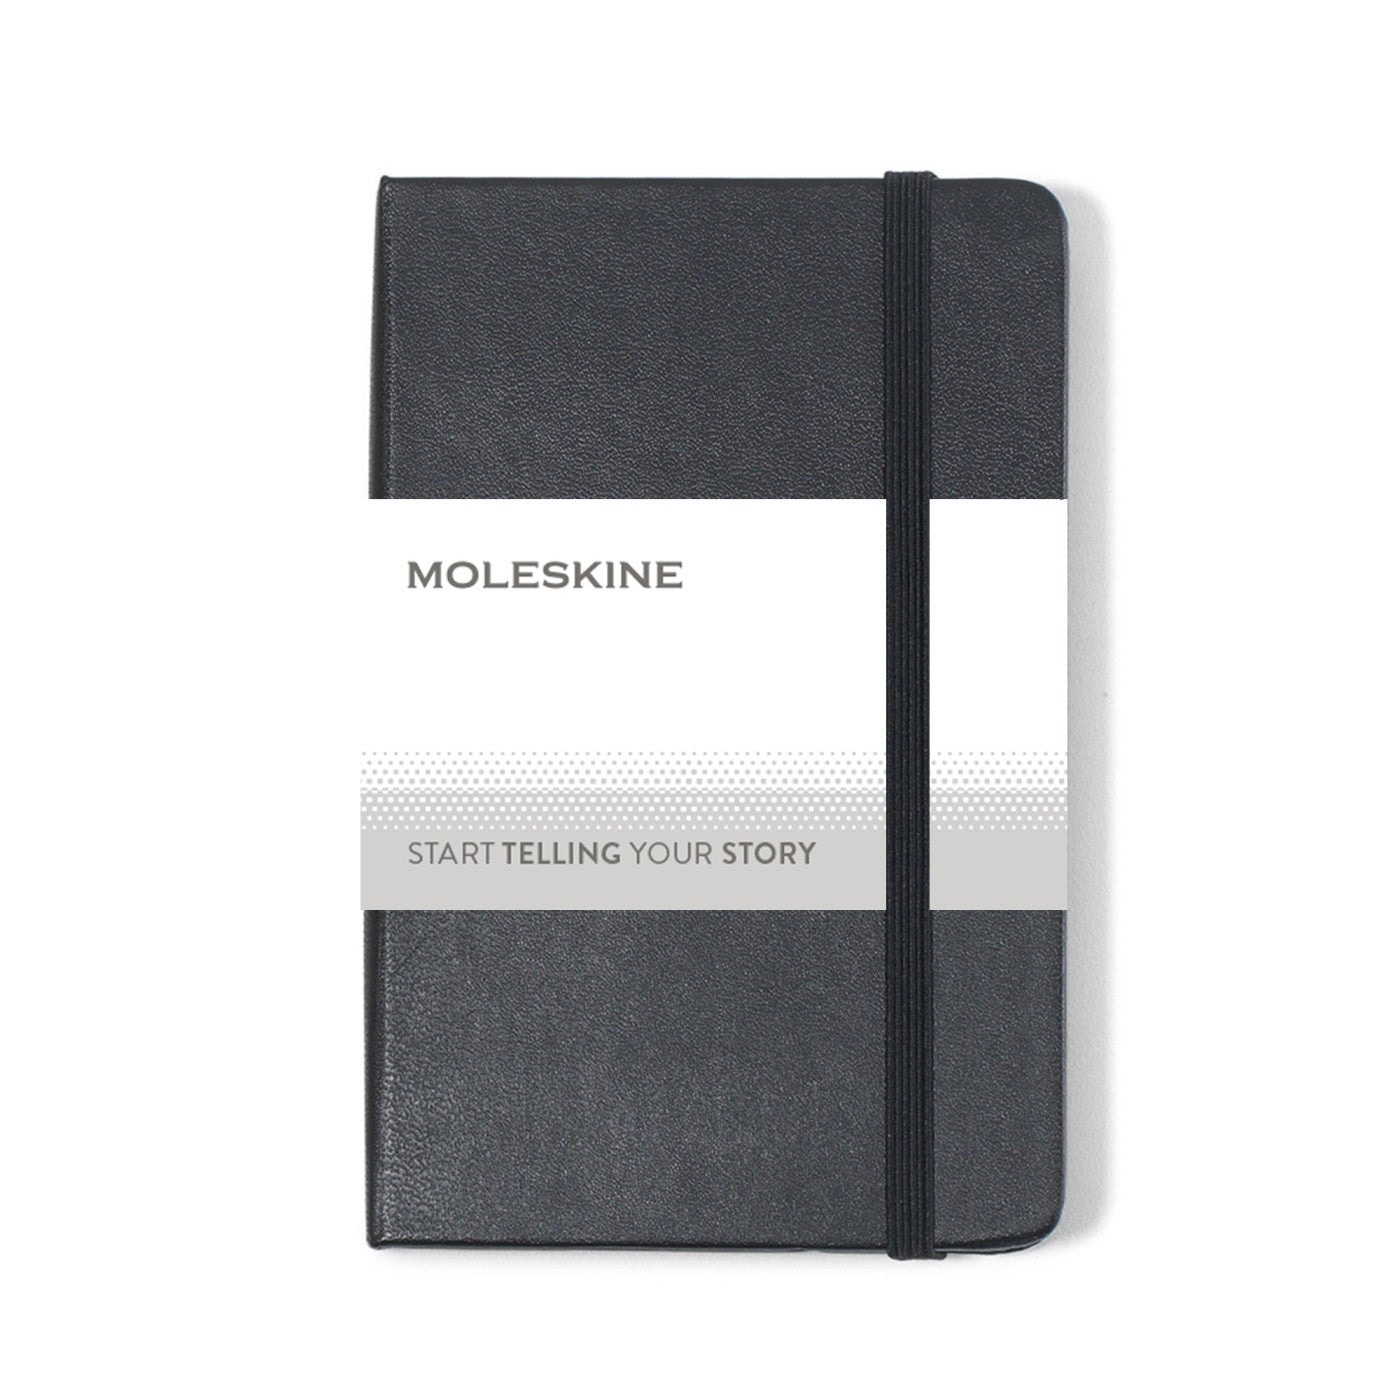 Moleskine Hard Cover Plain Pocket Notebook Black